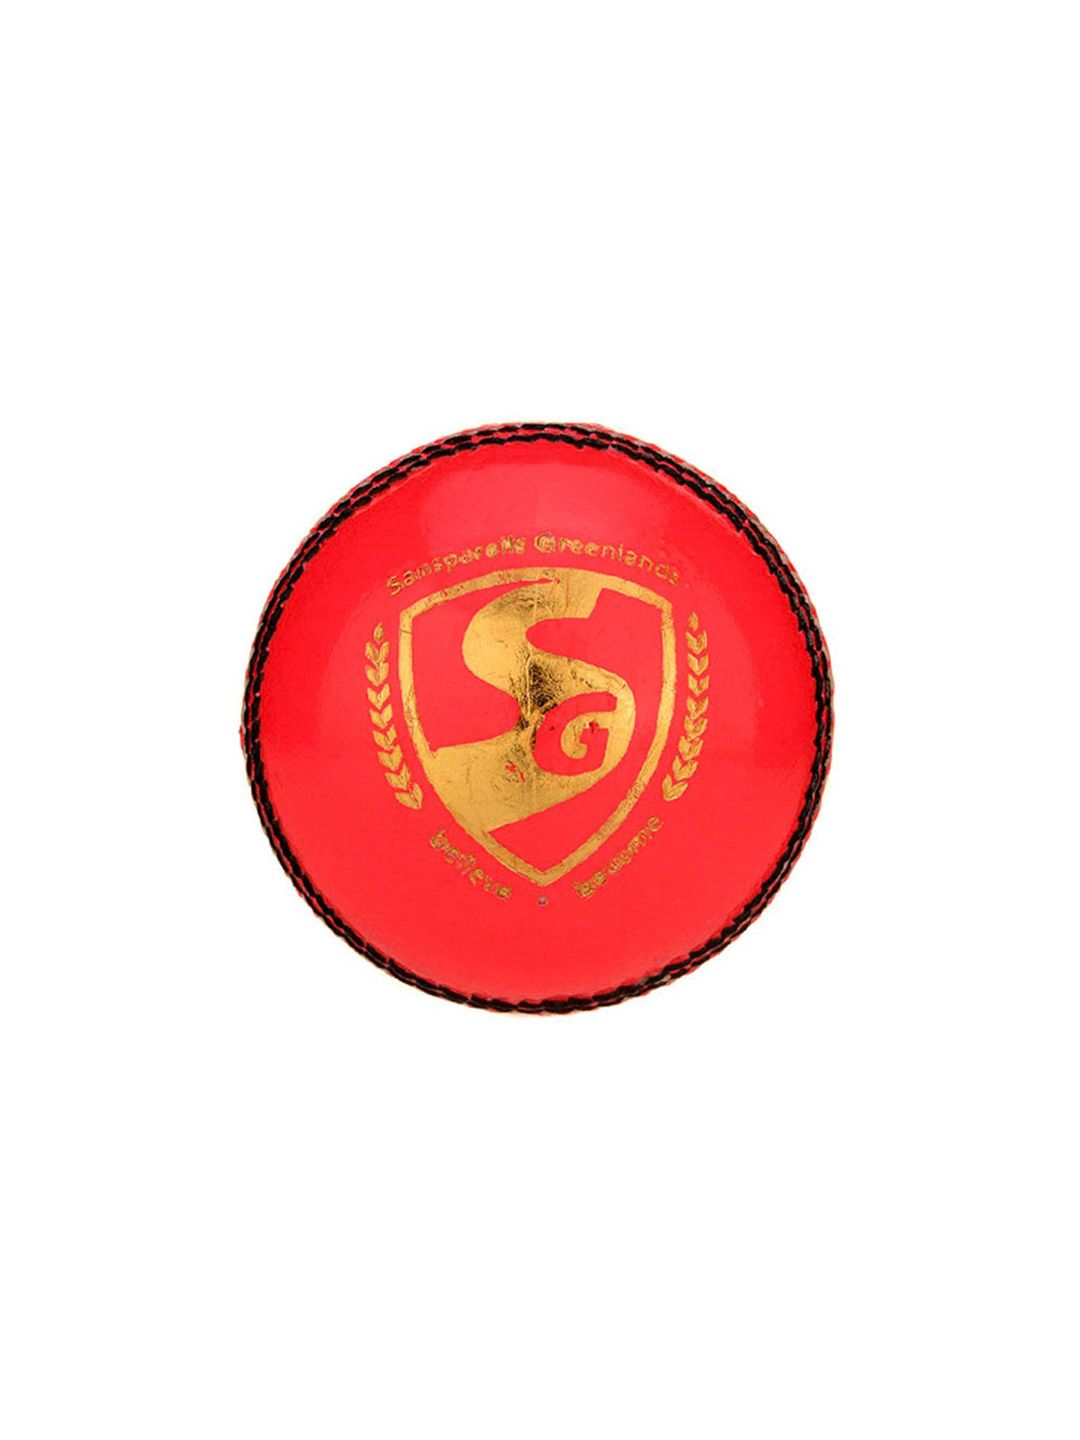 Cricket fire ball logo, simple style By Anatolir56 | TheHungryJPEG